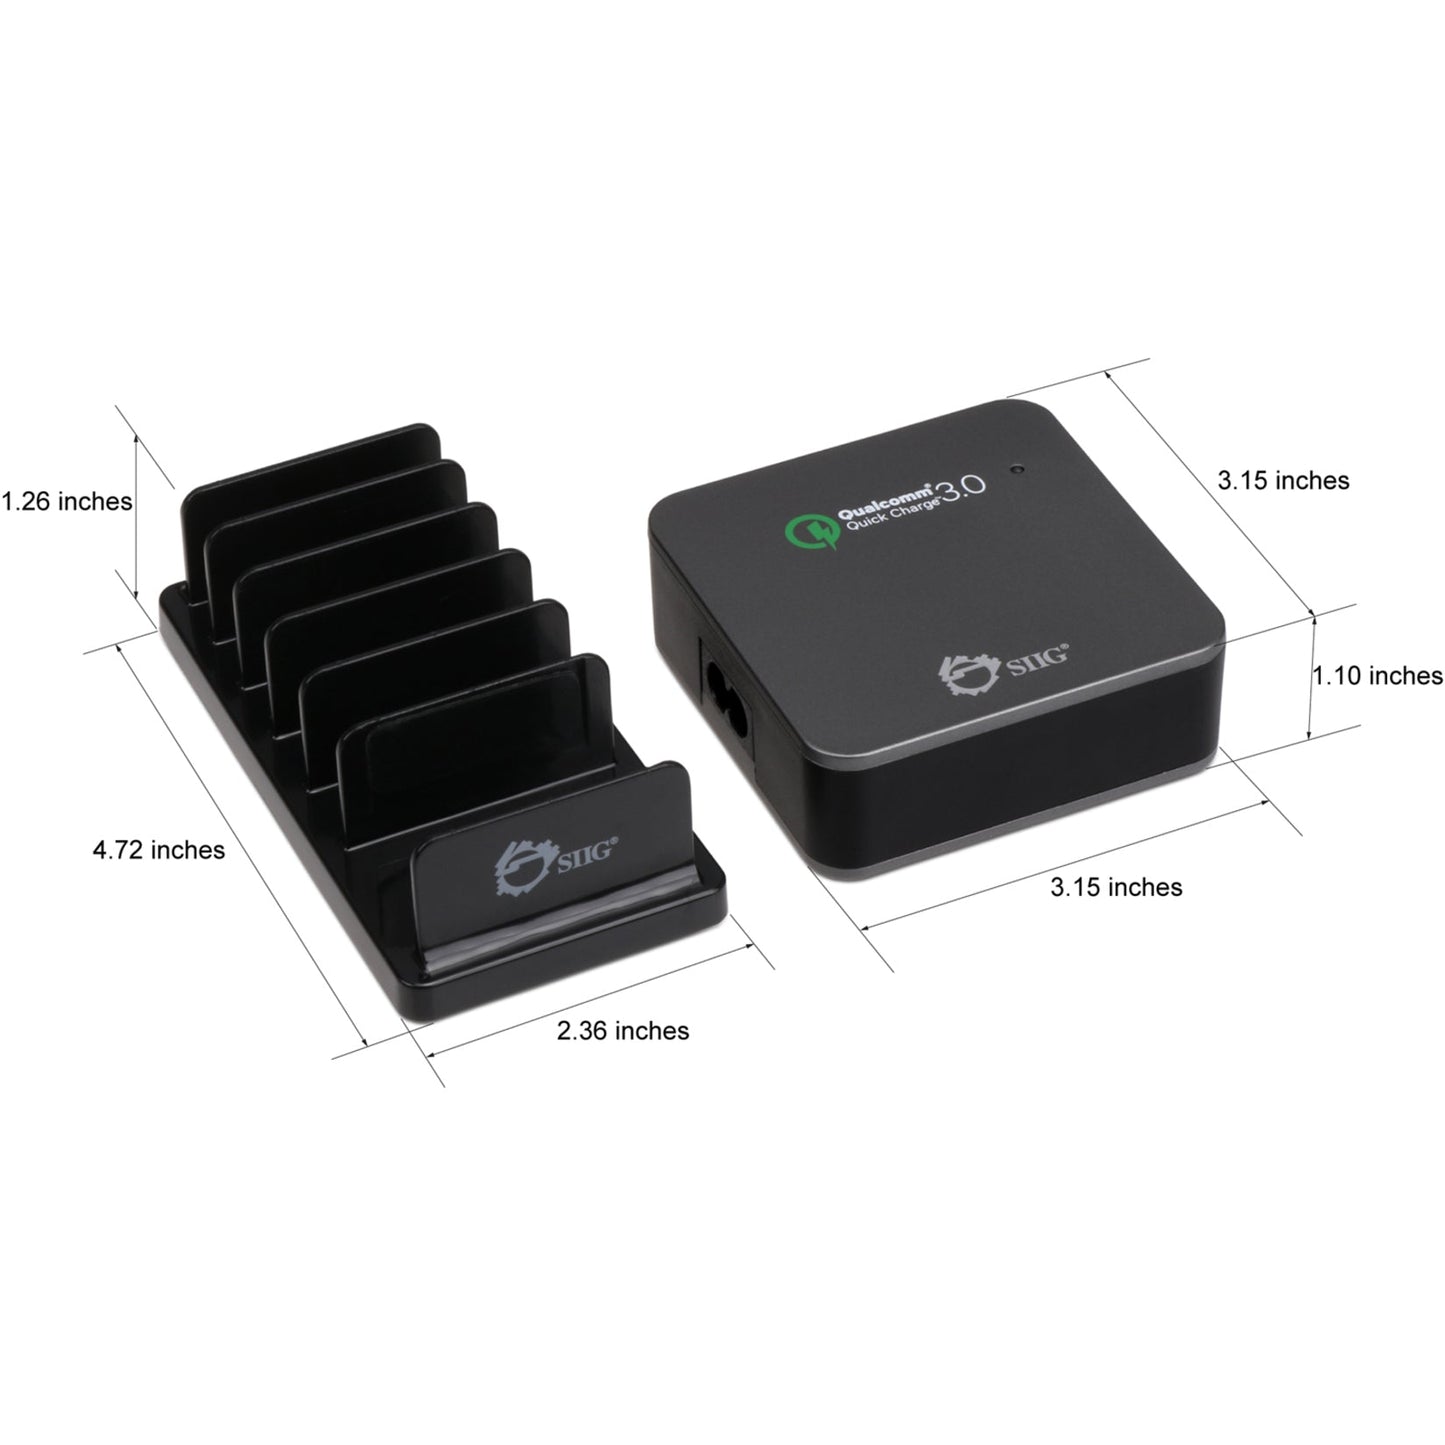 SIIG 5-Port Smart USB Charger plus Organizer Bundle with QC3.0 & USB-C - Black